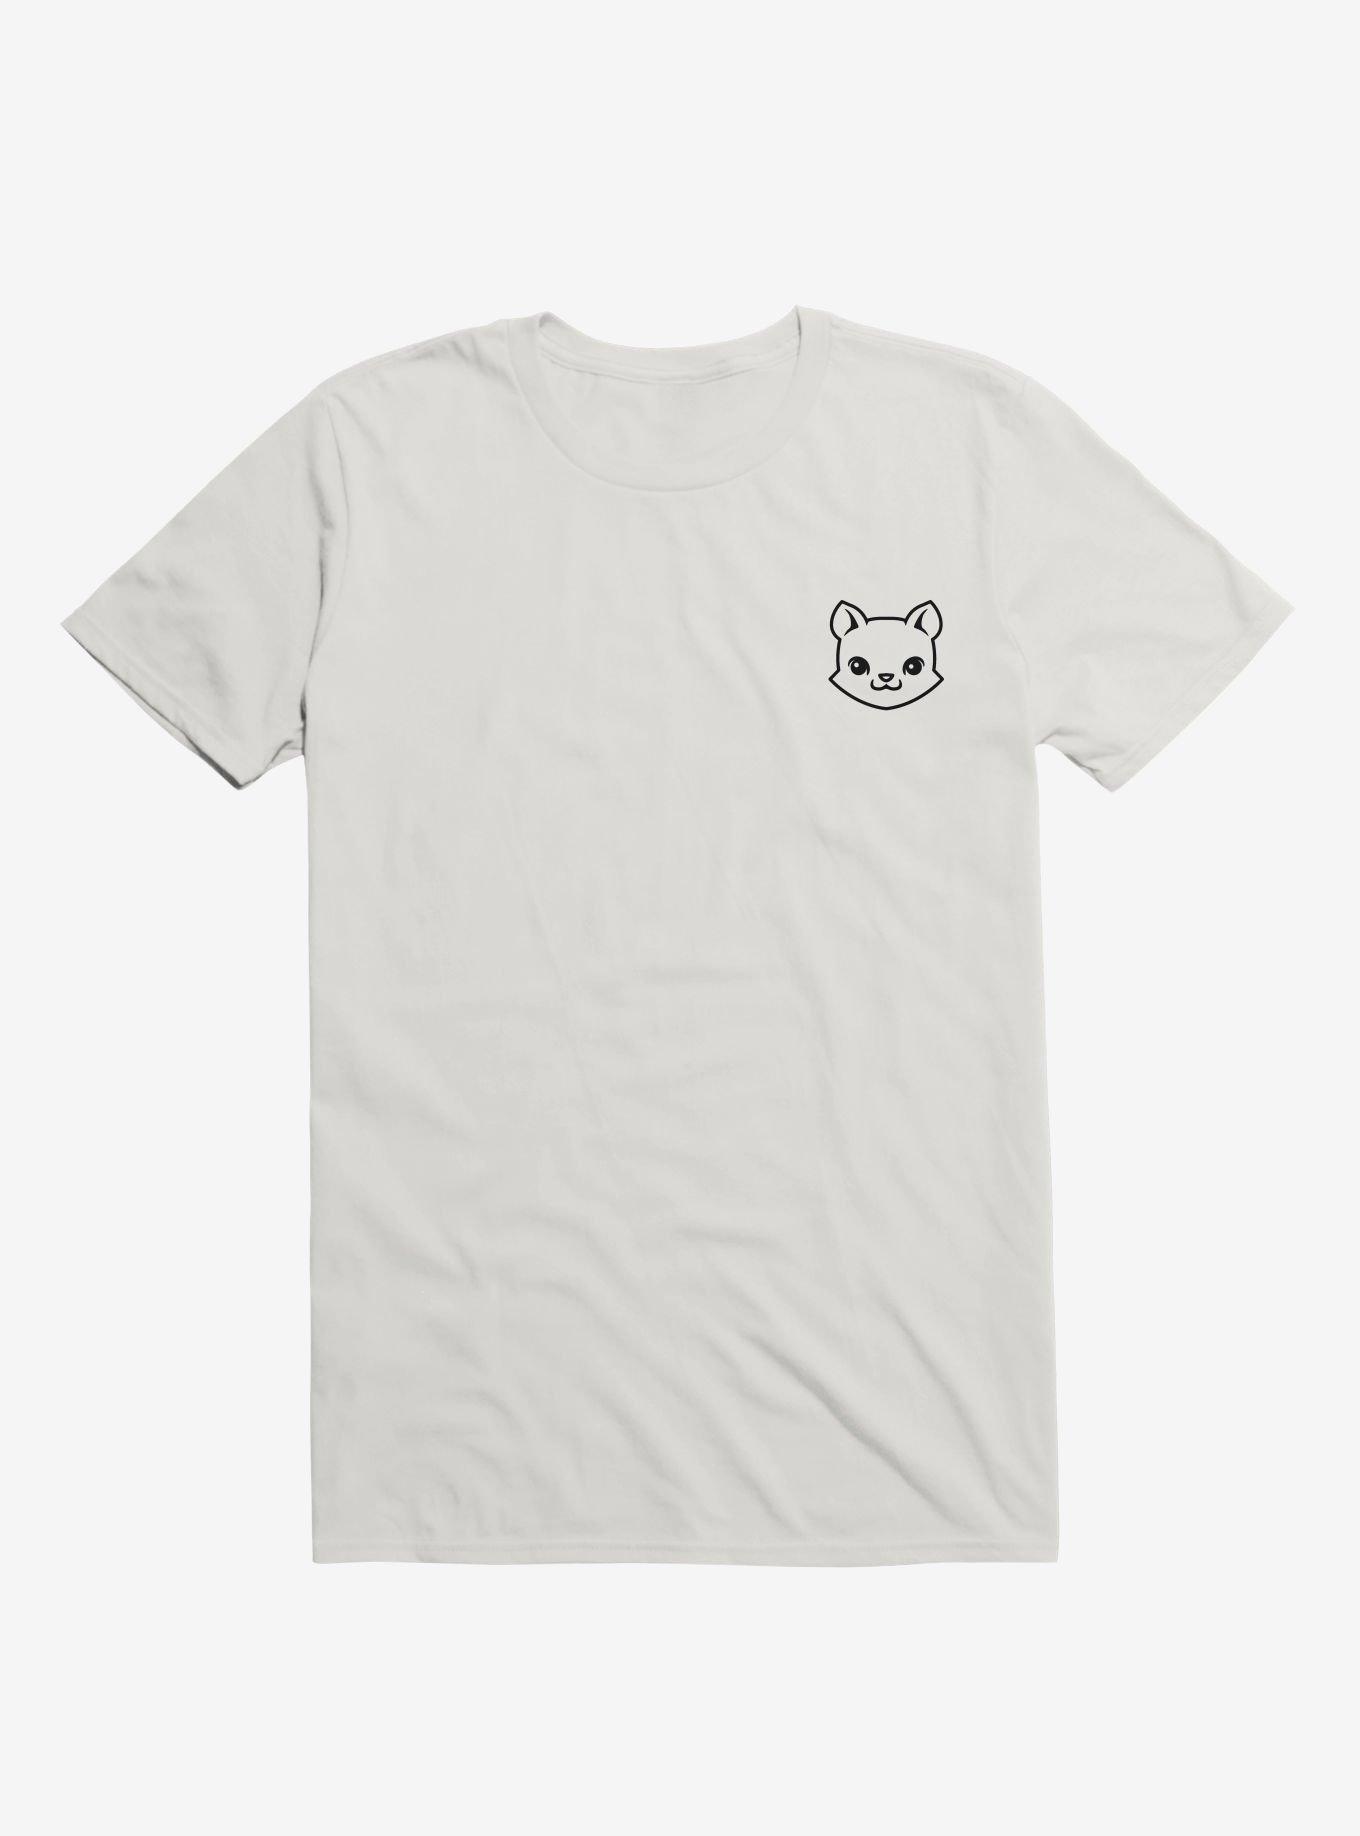 Cat Minimalist Pictogram White T-Shirt